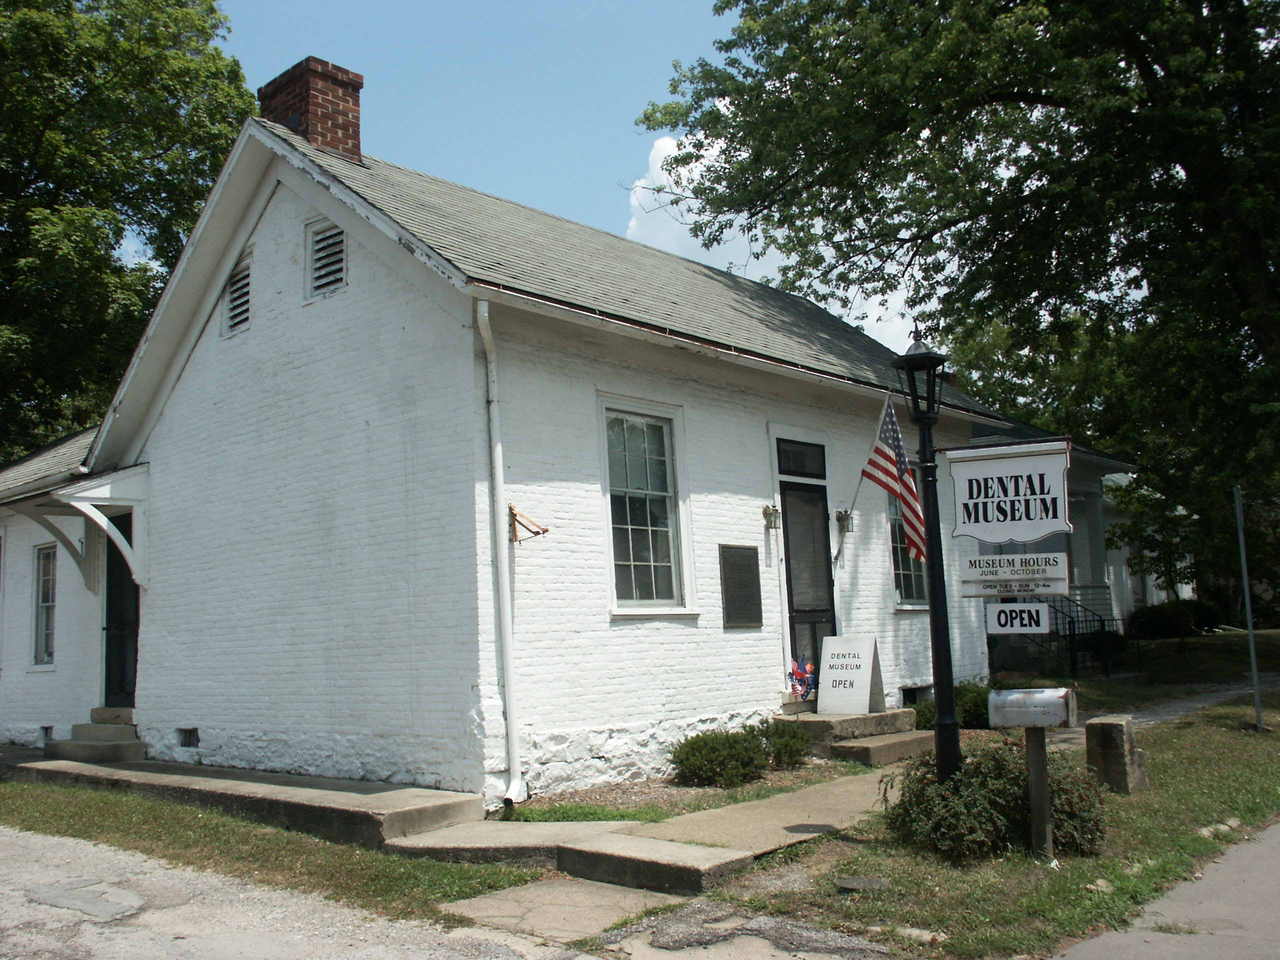 Bainbridge, OH: The Dental Museum in 'Downtown Bainbridge" on US Route 50